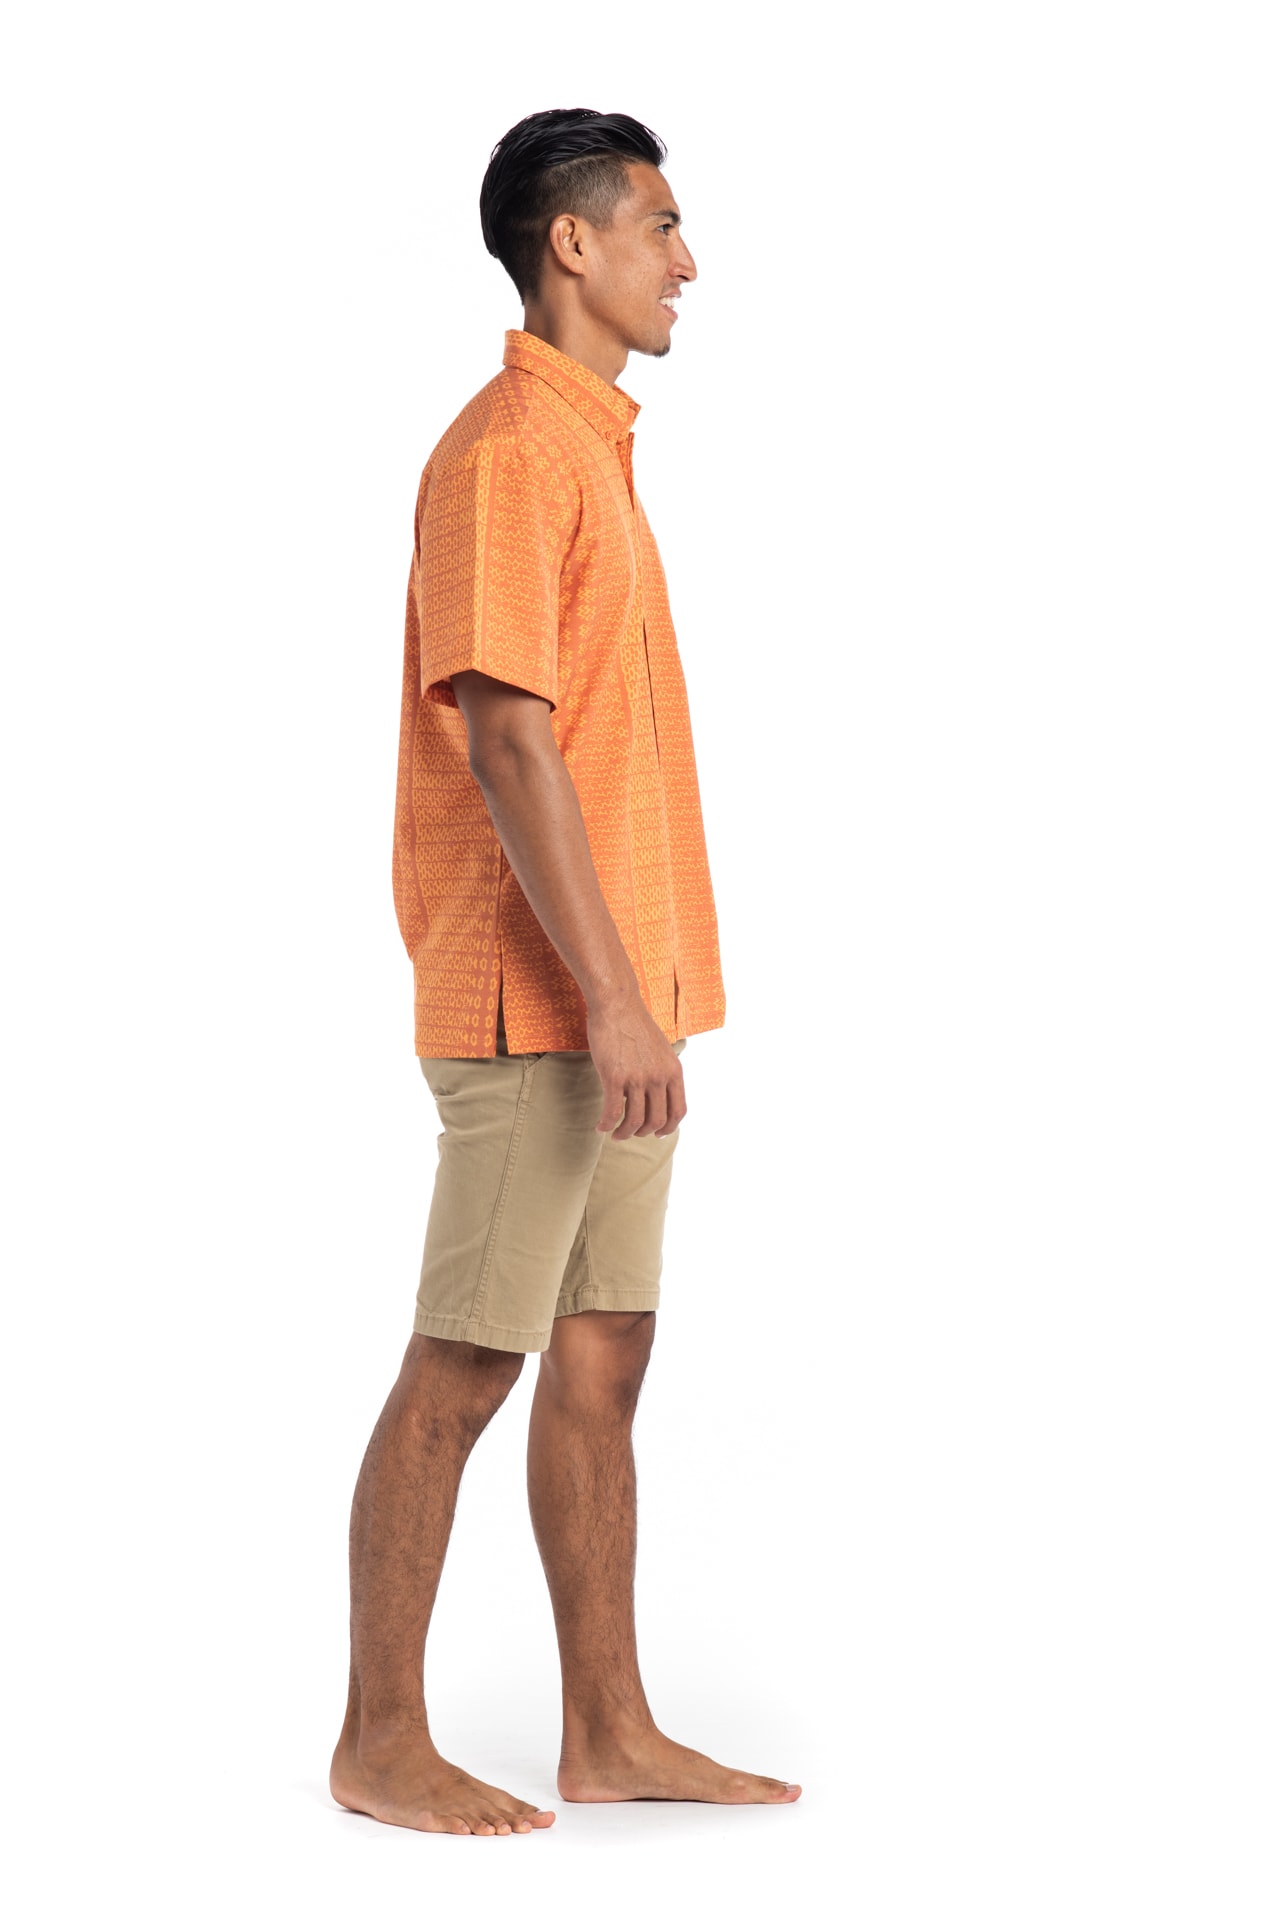 Male model wearing Mahalo Nui Shirt in Orange AkoaAkoa - Side View